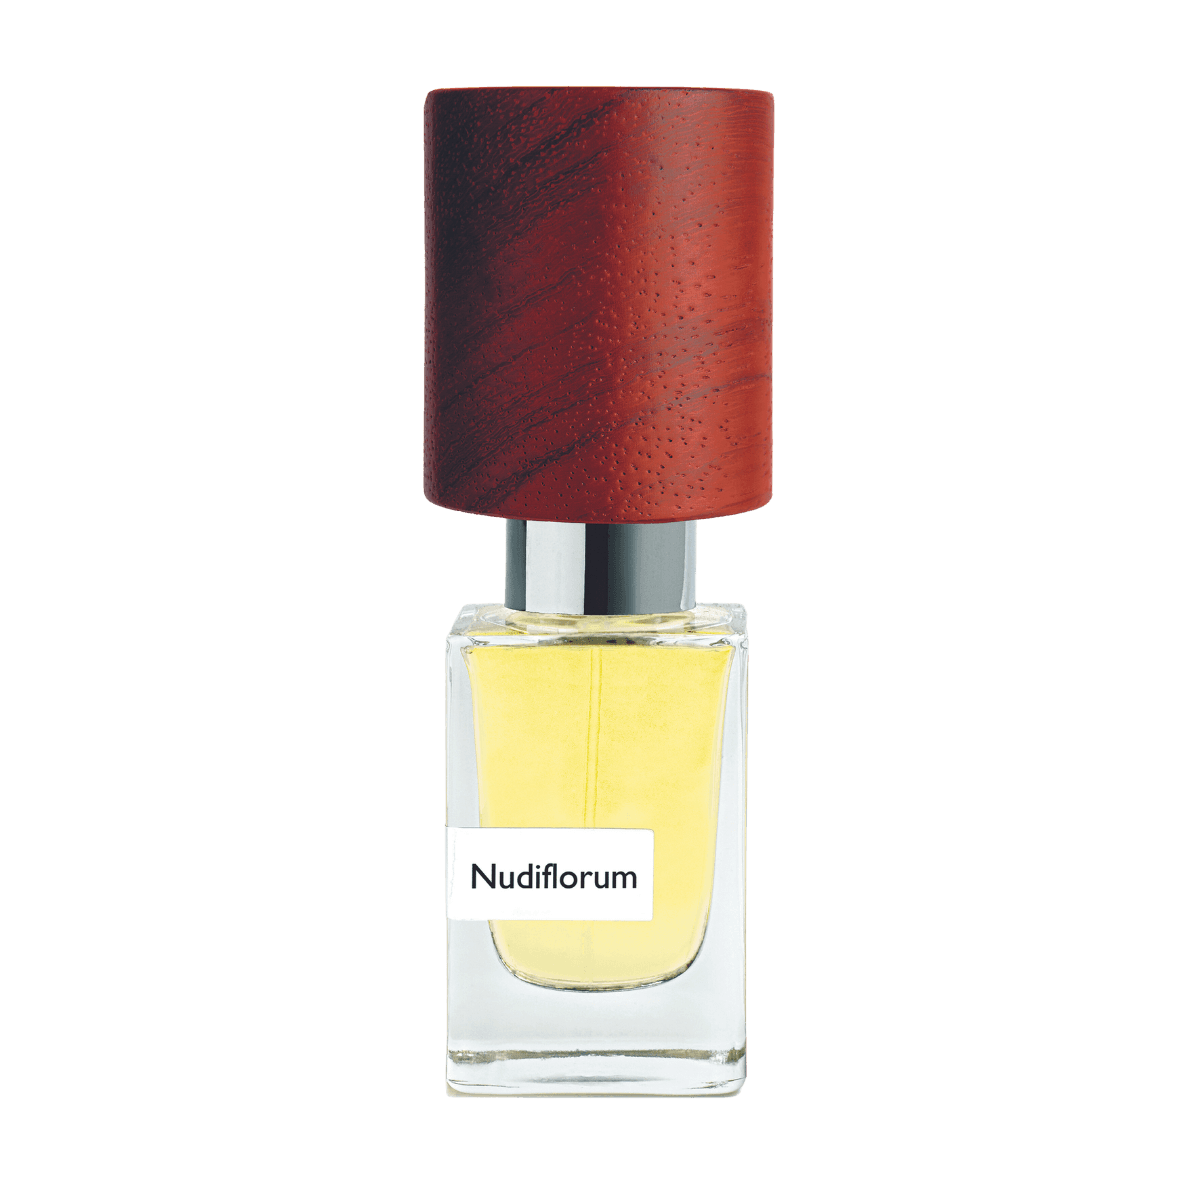 Image of Nudiflorum extrait de parfum 30 ml by the perfume brand Nasomatto